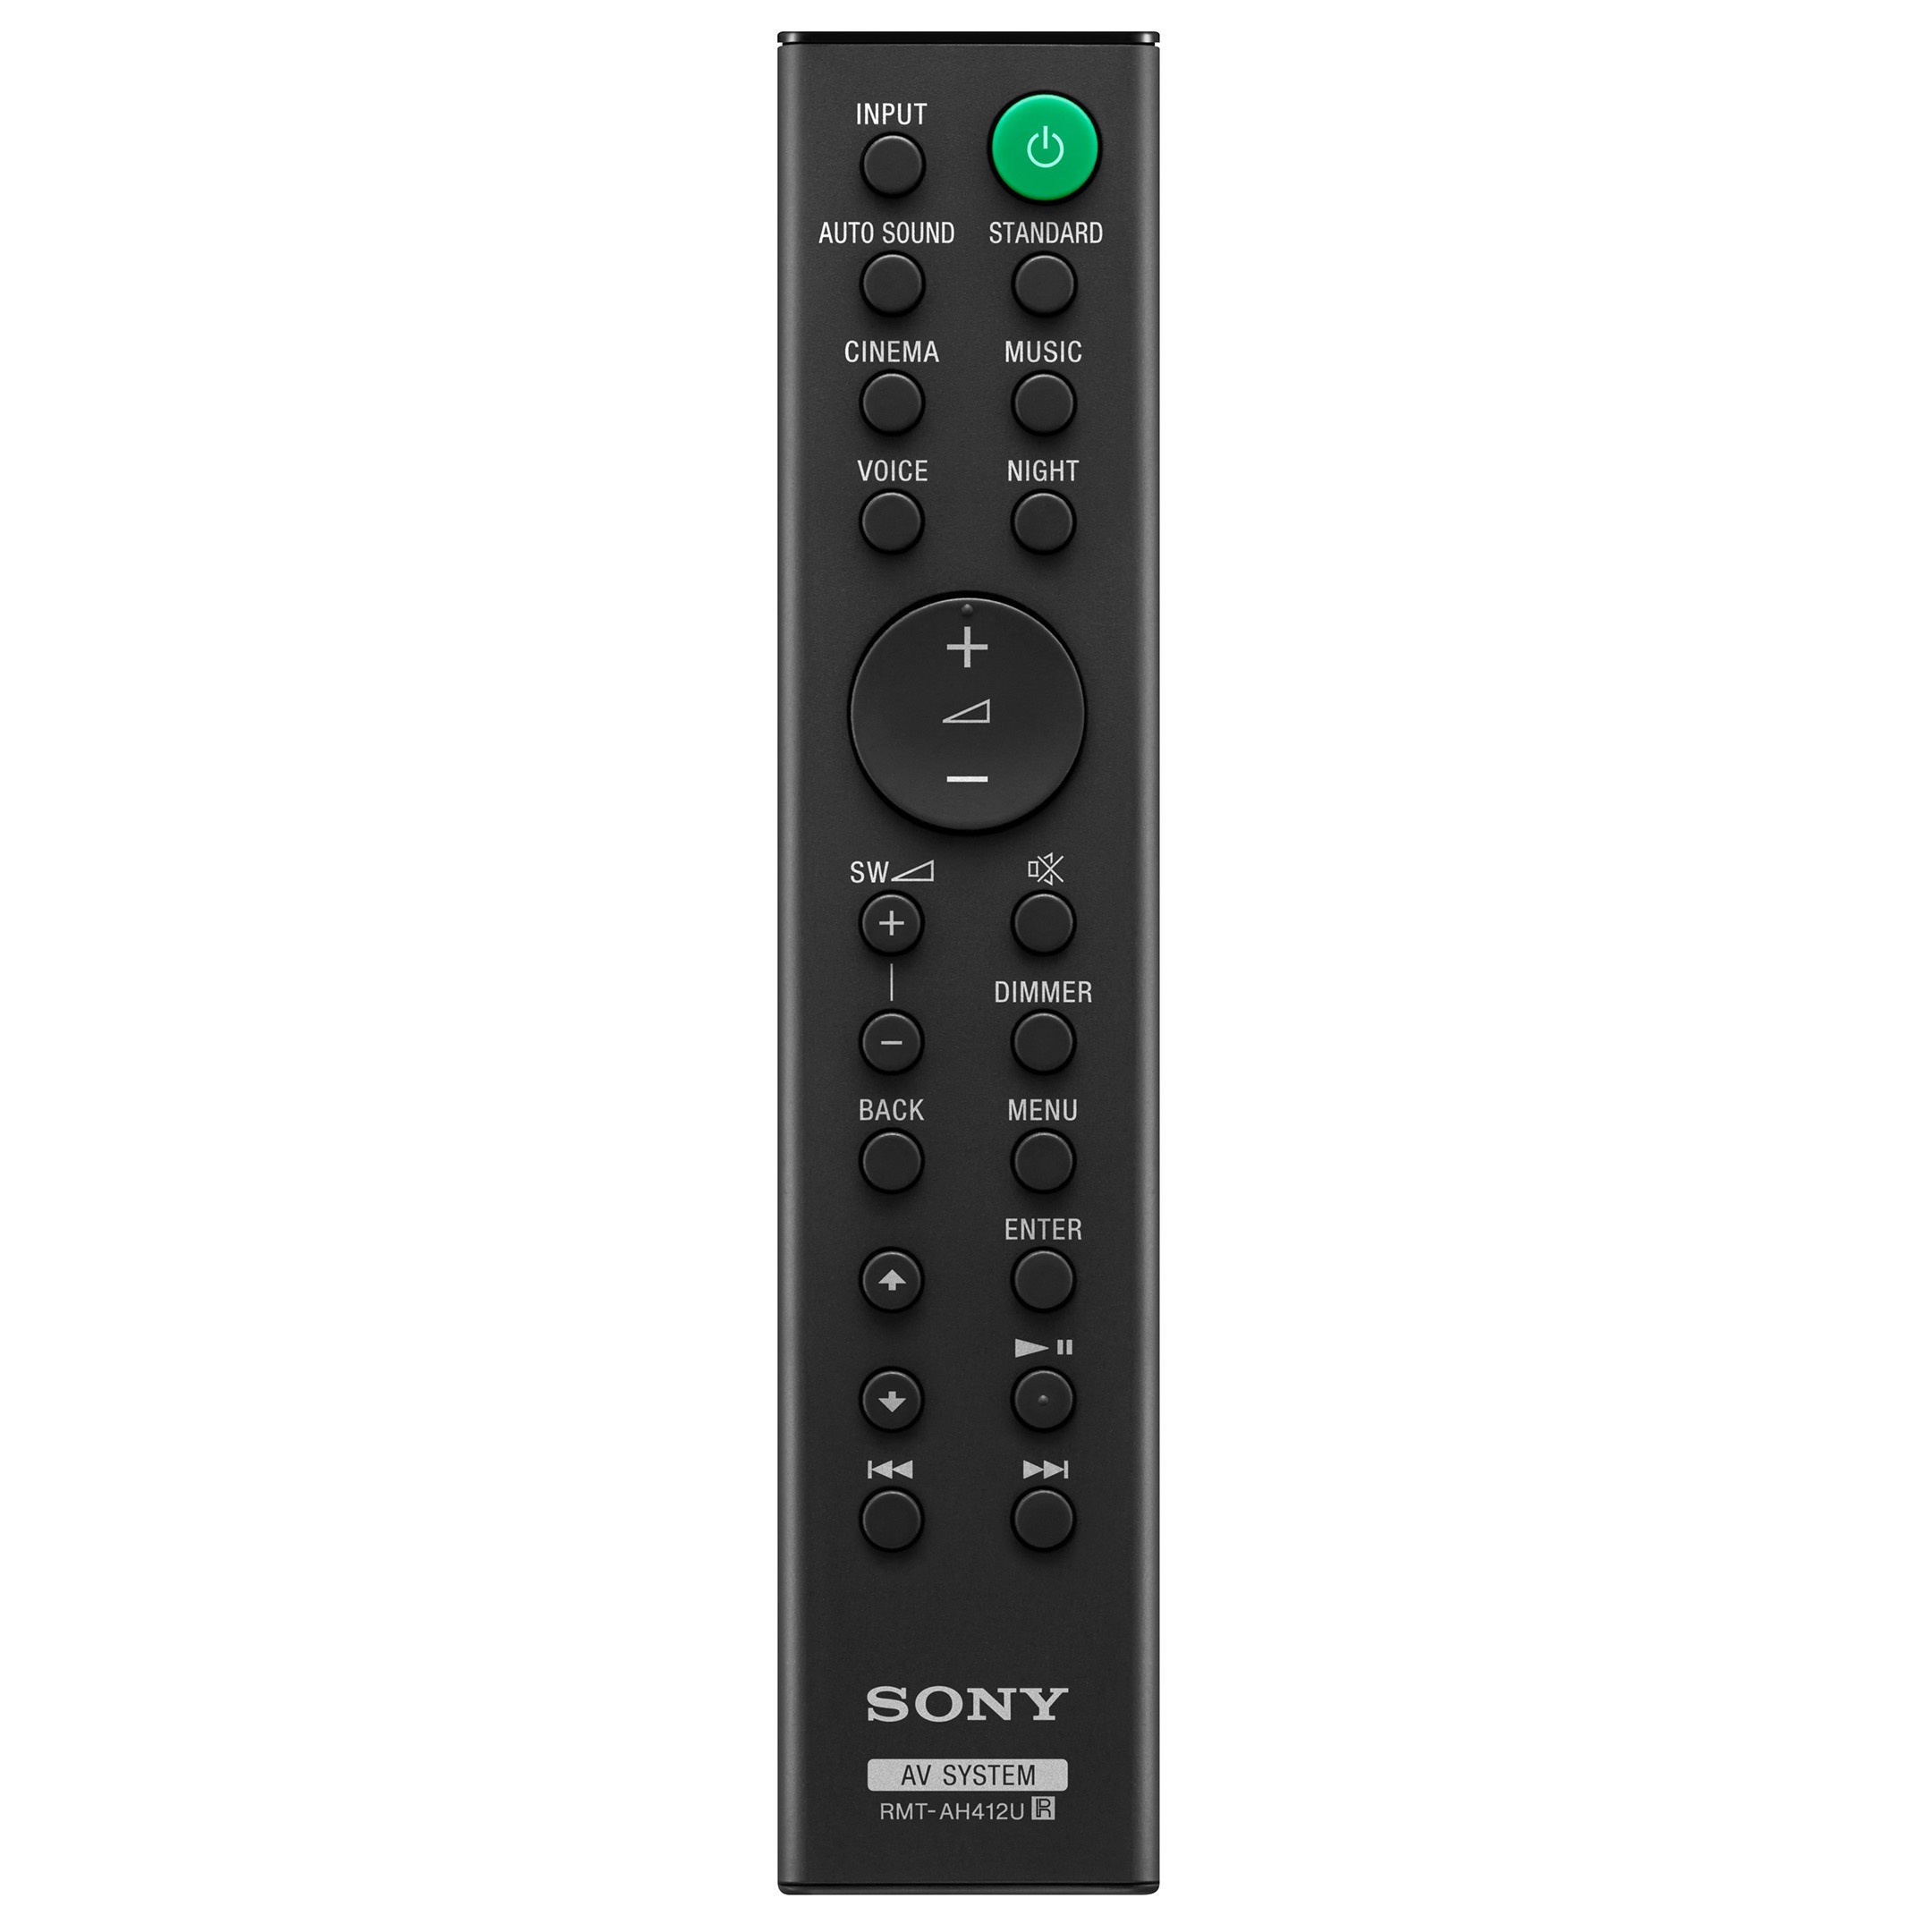 Sony HT-G700 remote